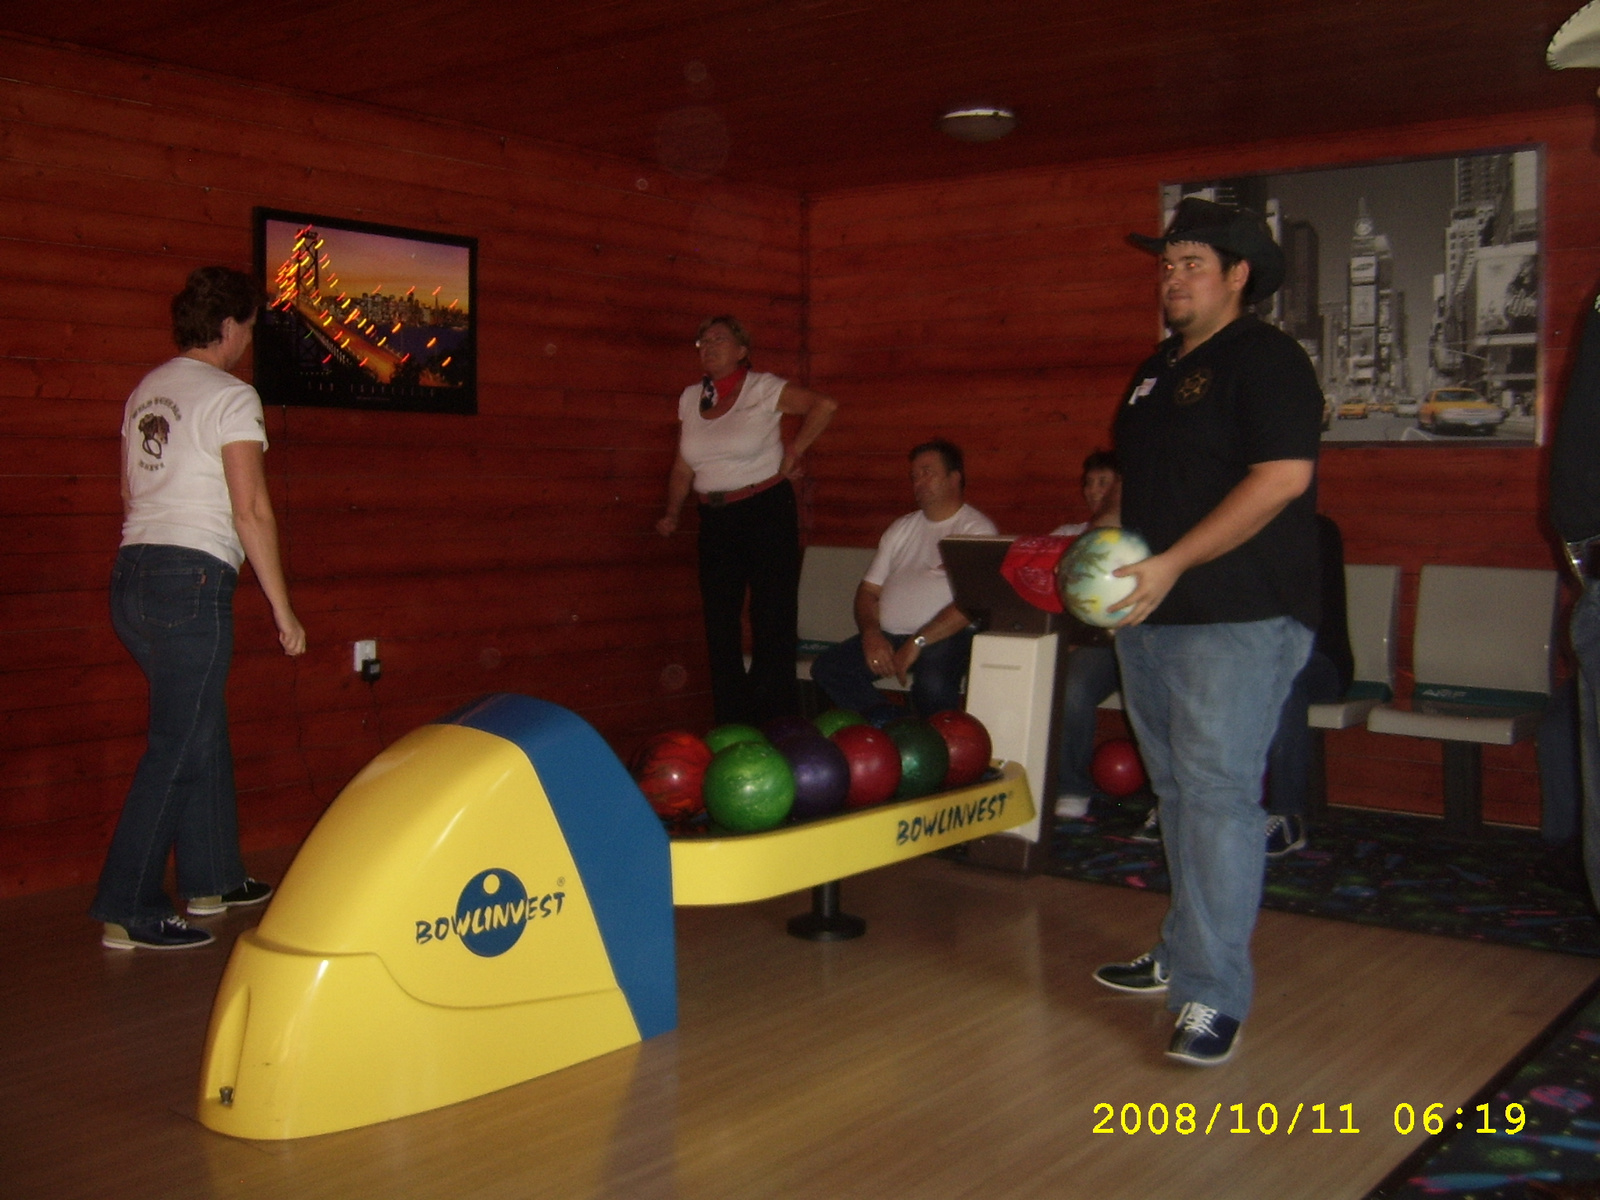 081011 Willams Western Village Bowling Linedance bajnokság 049